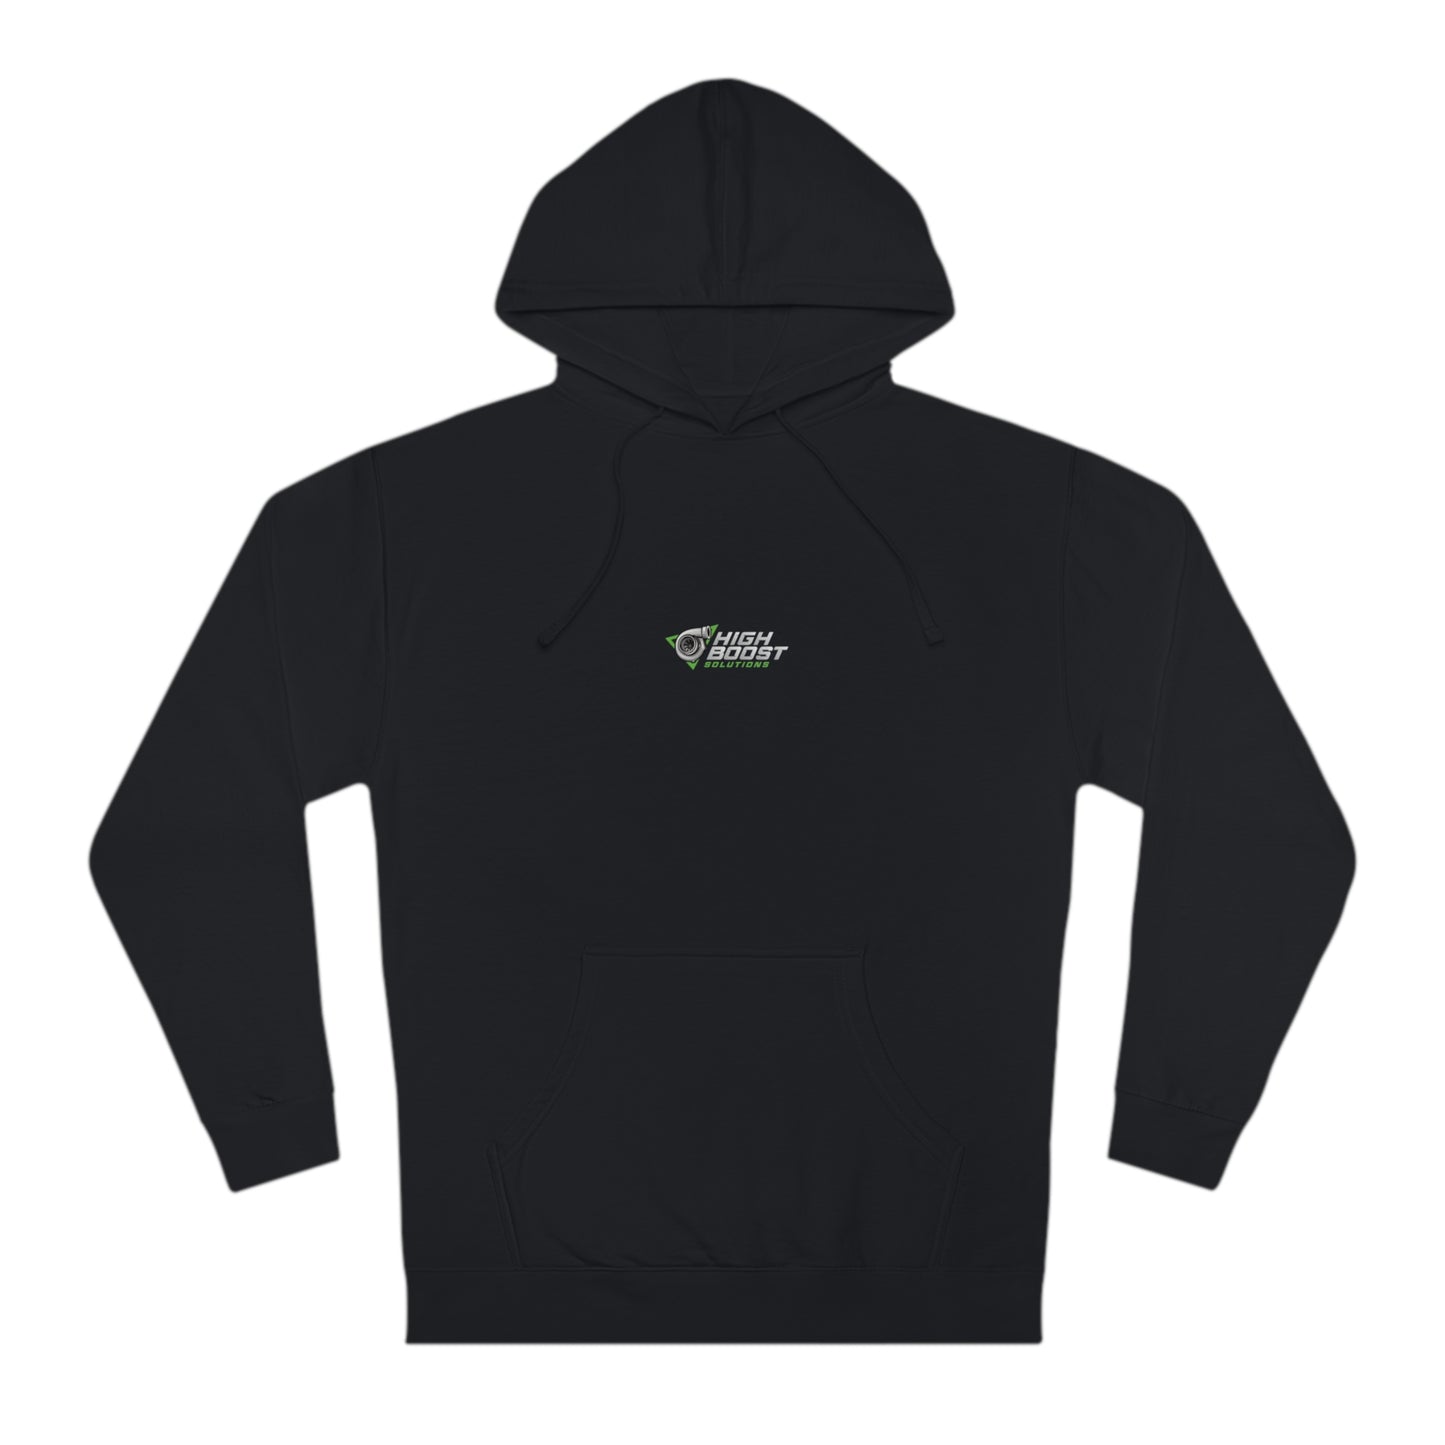 Unisex Hooded Sweatshirt our first design